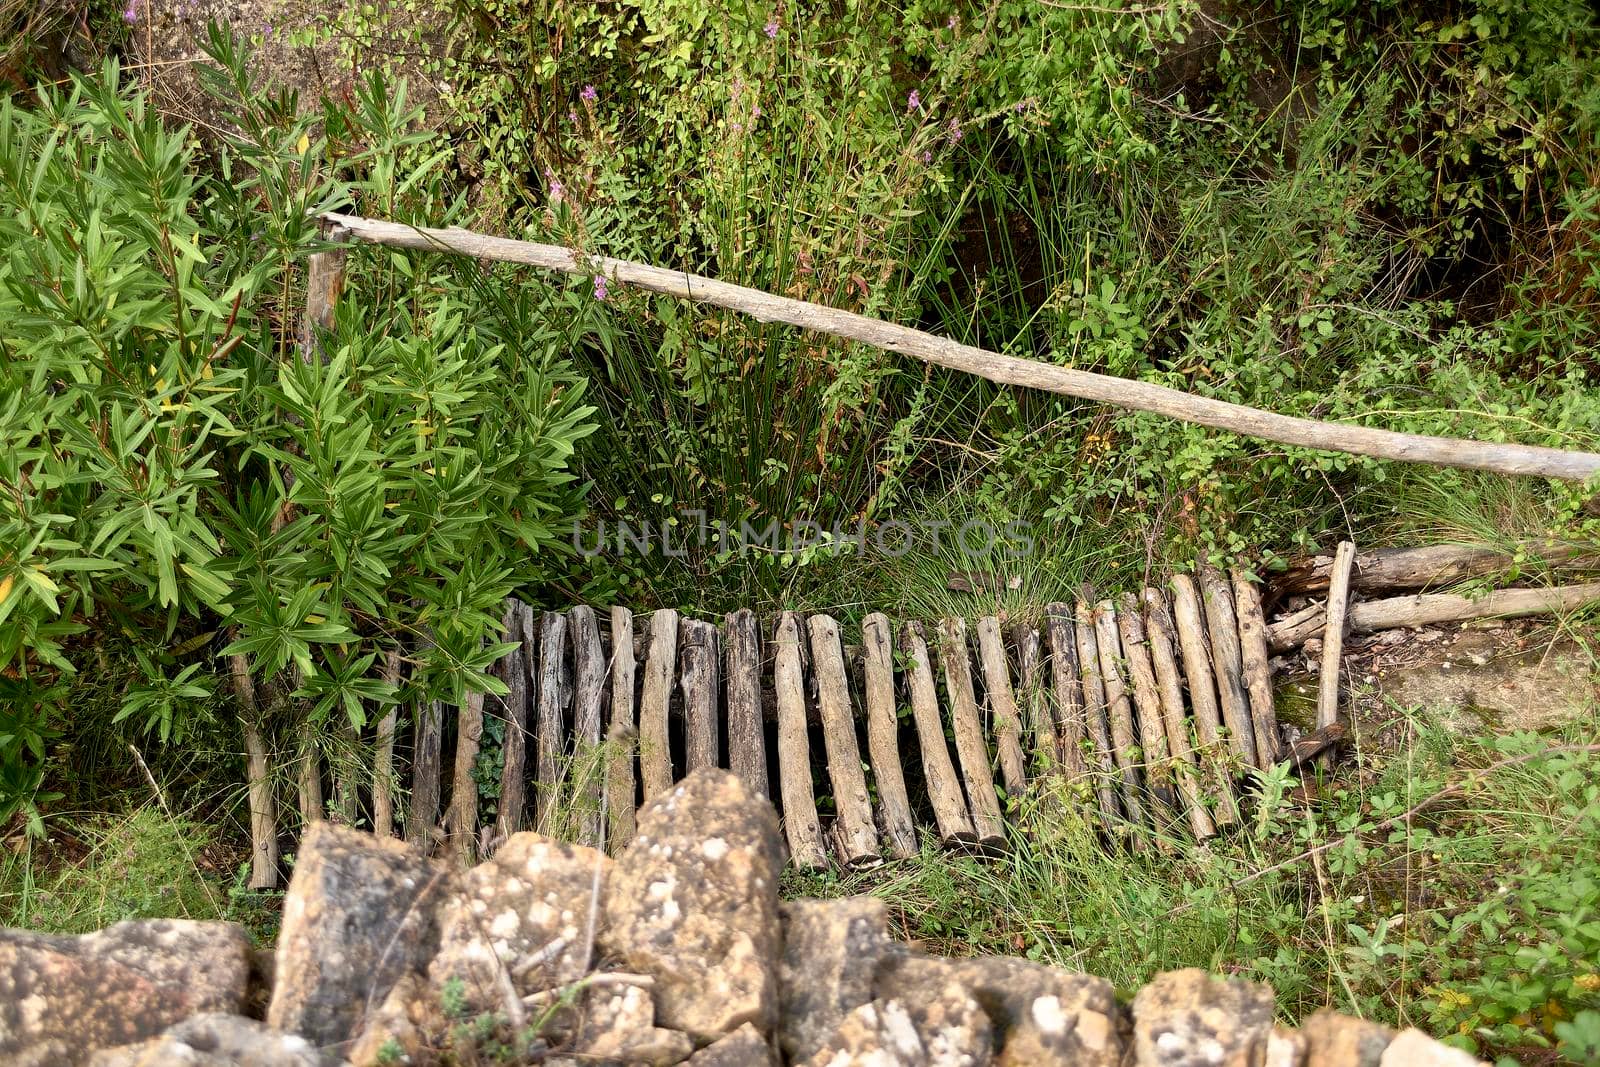 Bridge made of wood destroyed in the vegetation by raul_ruiz